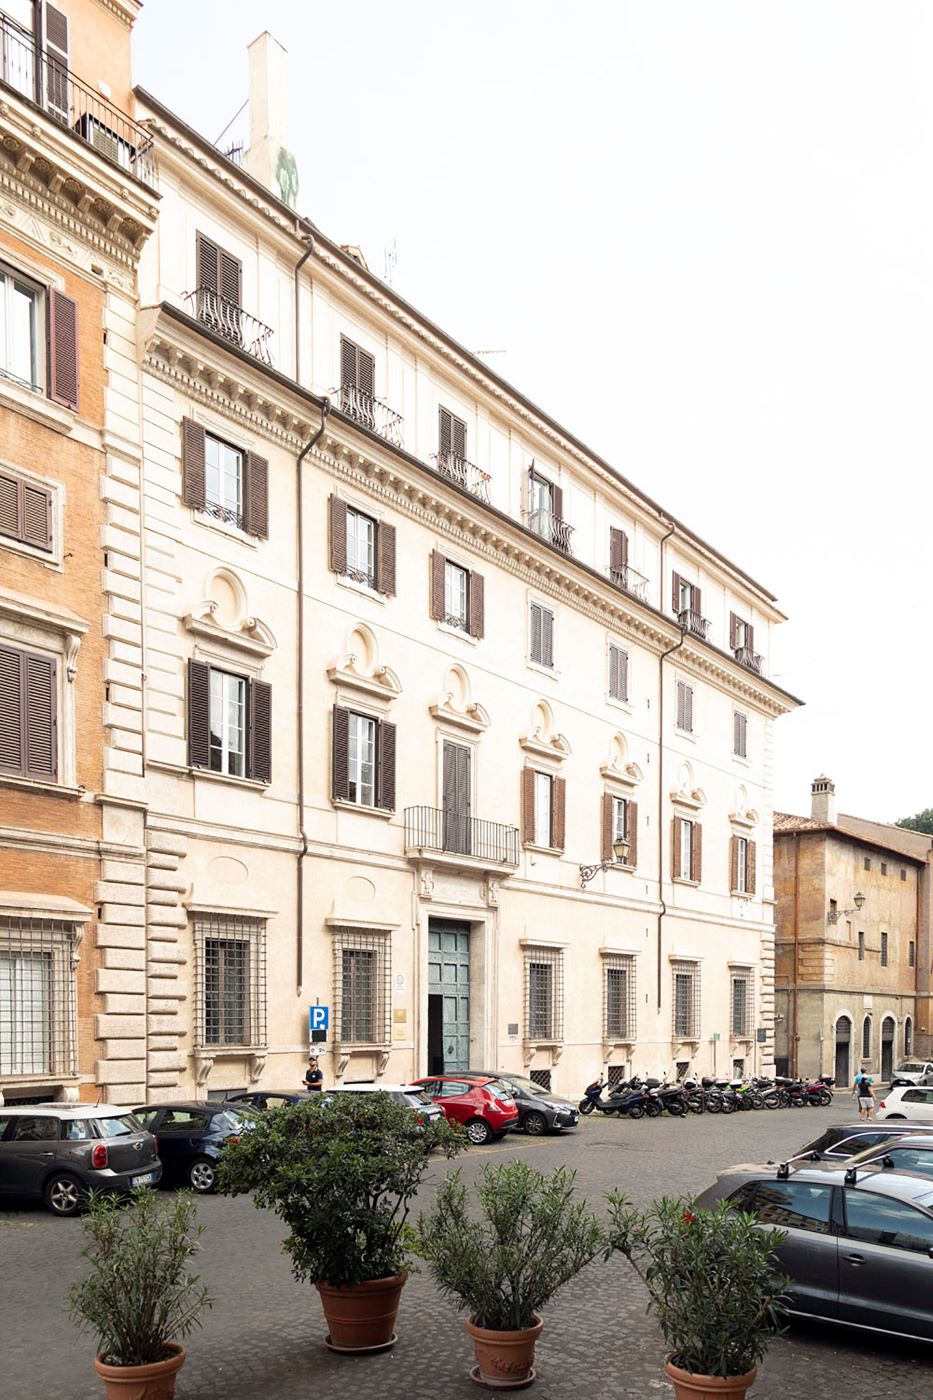 External photo of a restored Roman palazzo